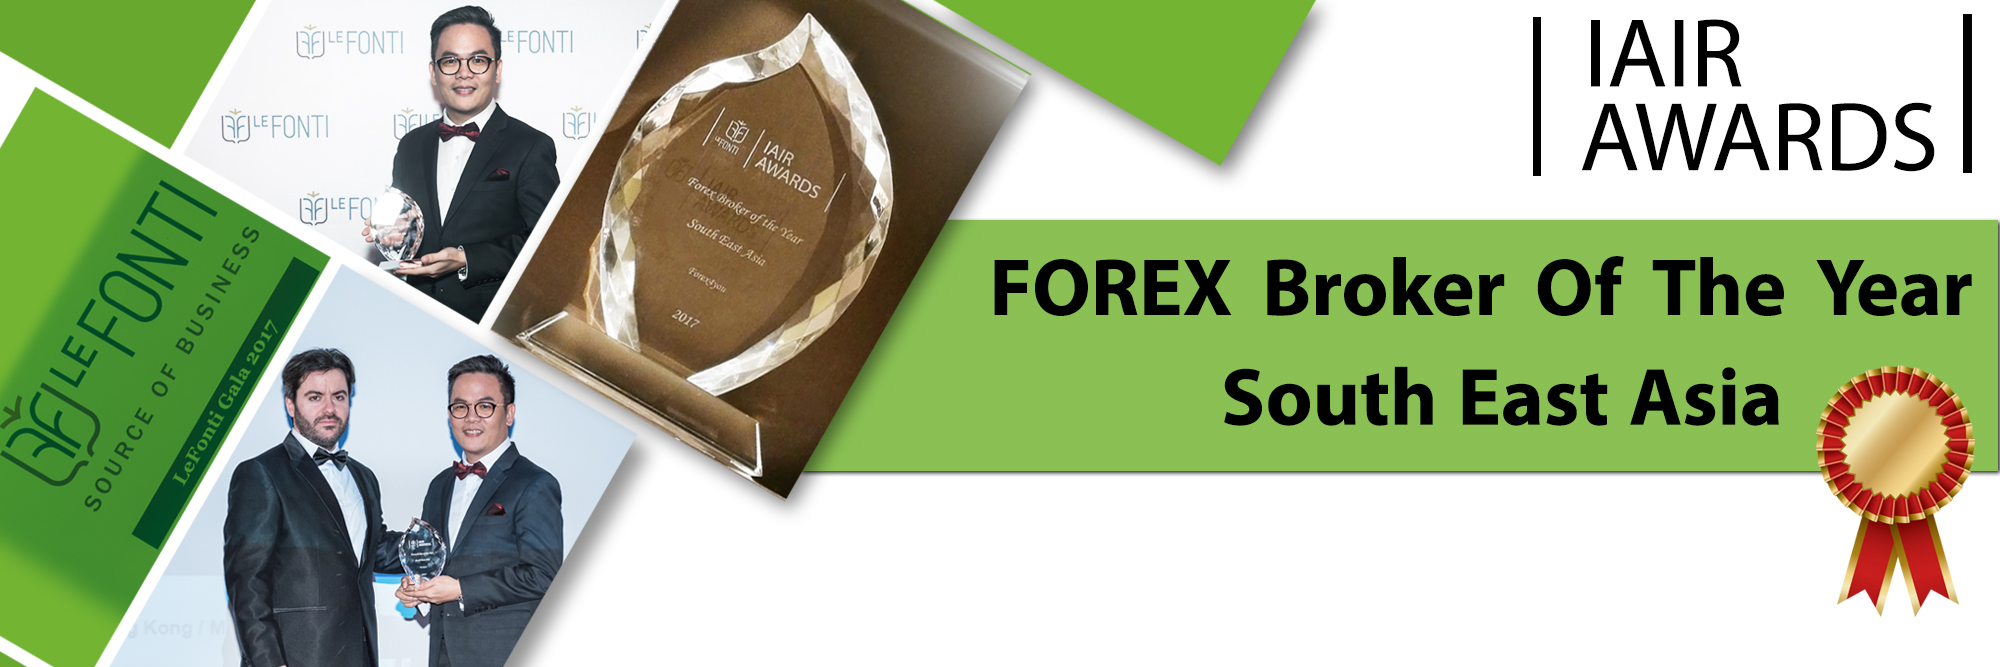 Forex awards